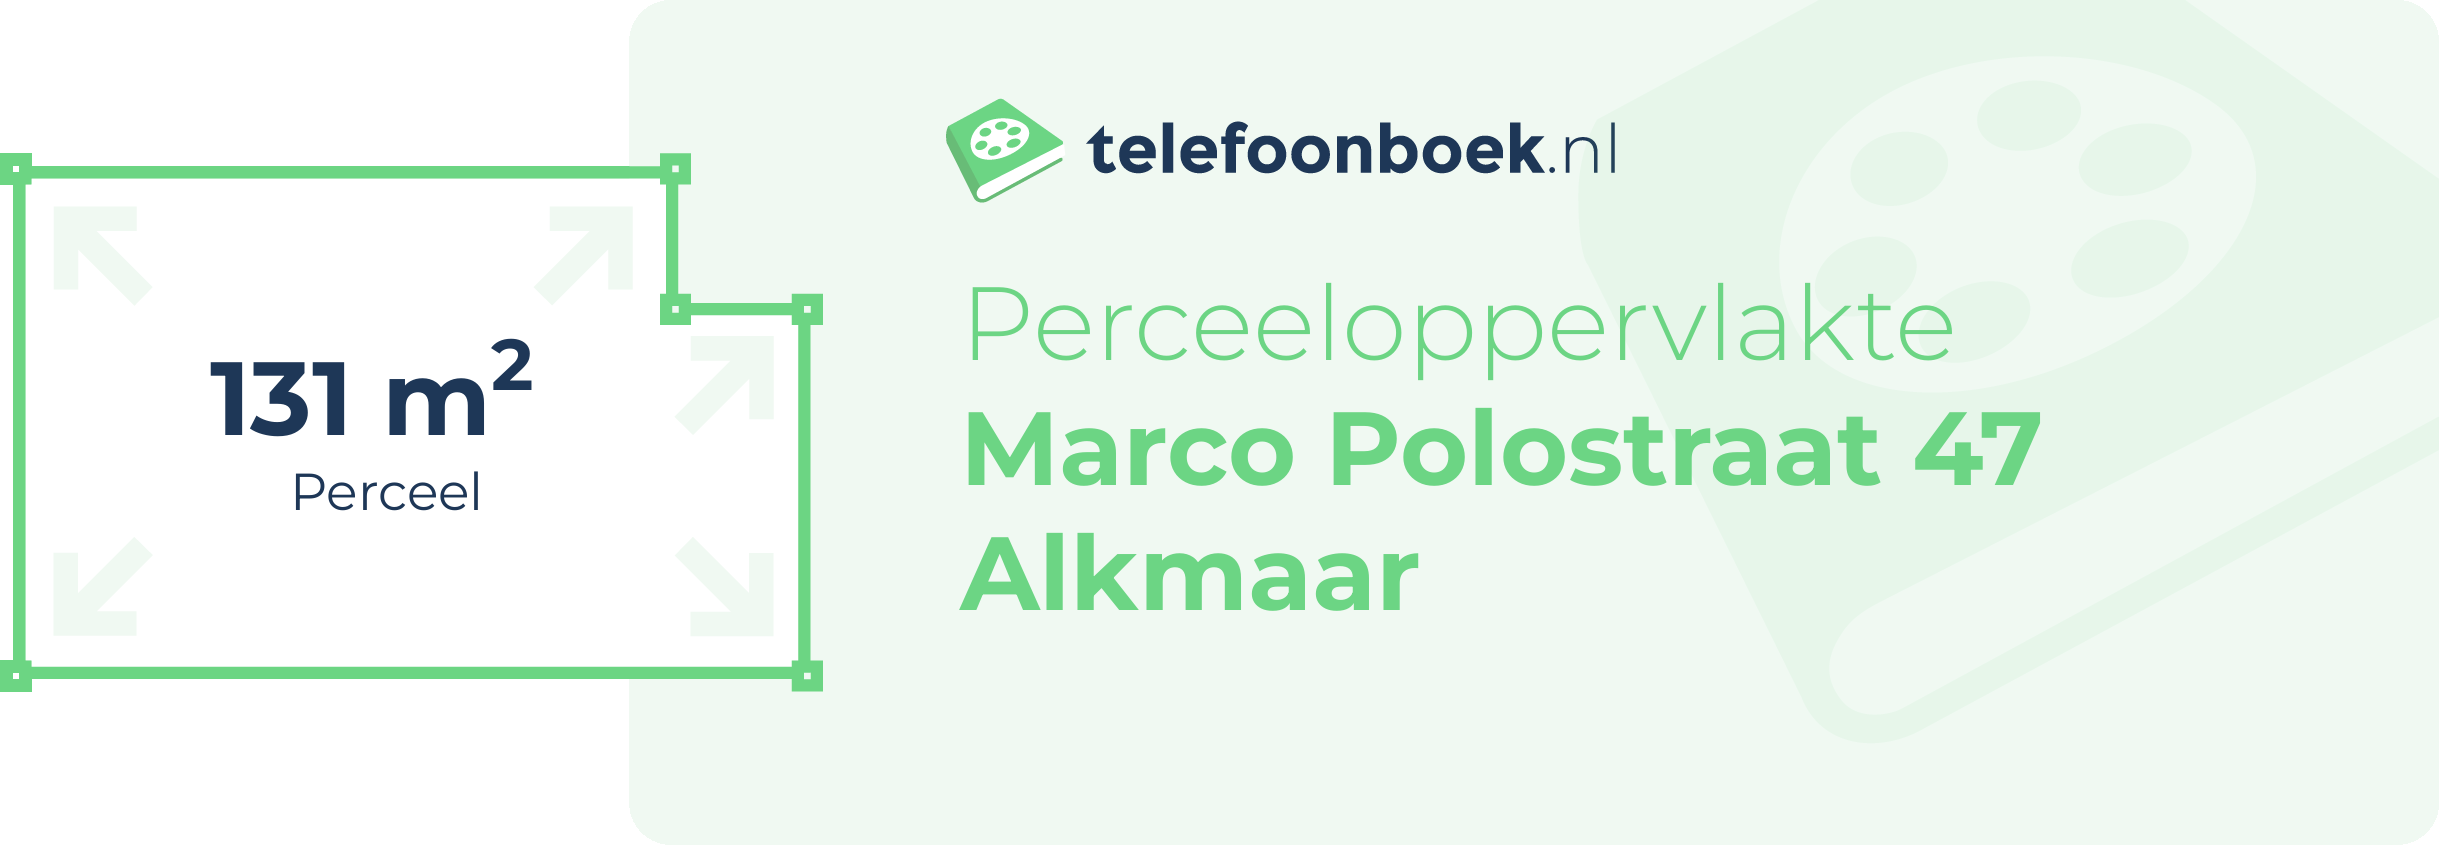 Perceeloppervlakte Marco Polostraat 47 Alkmaar